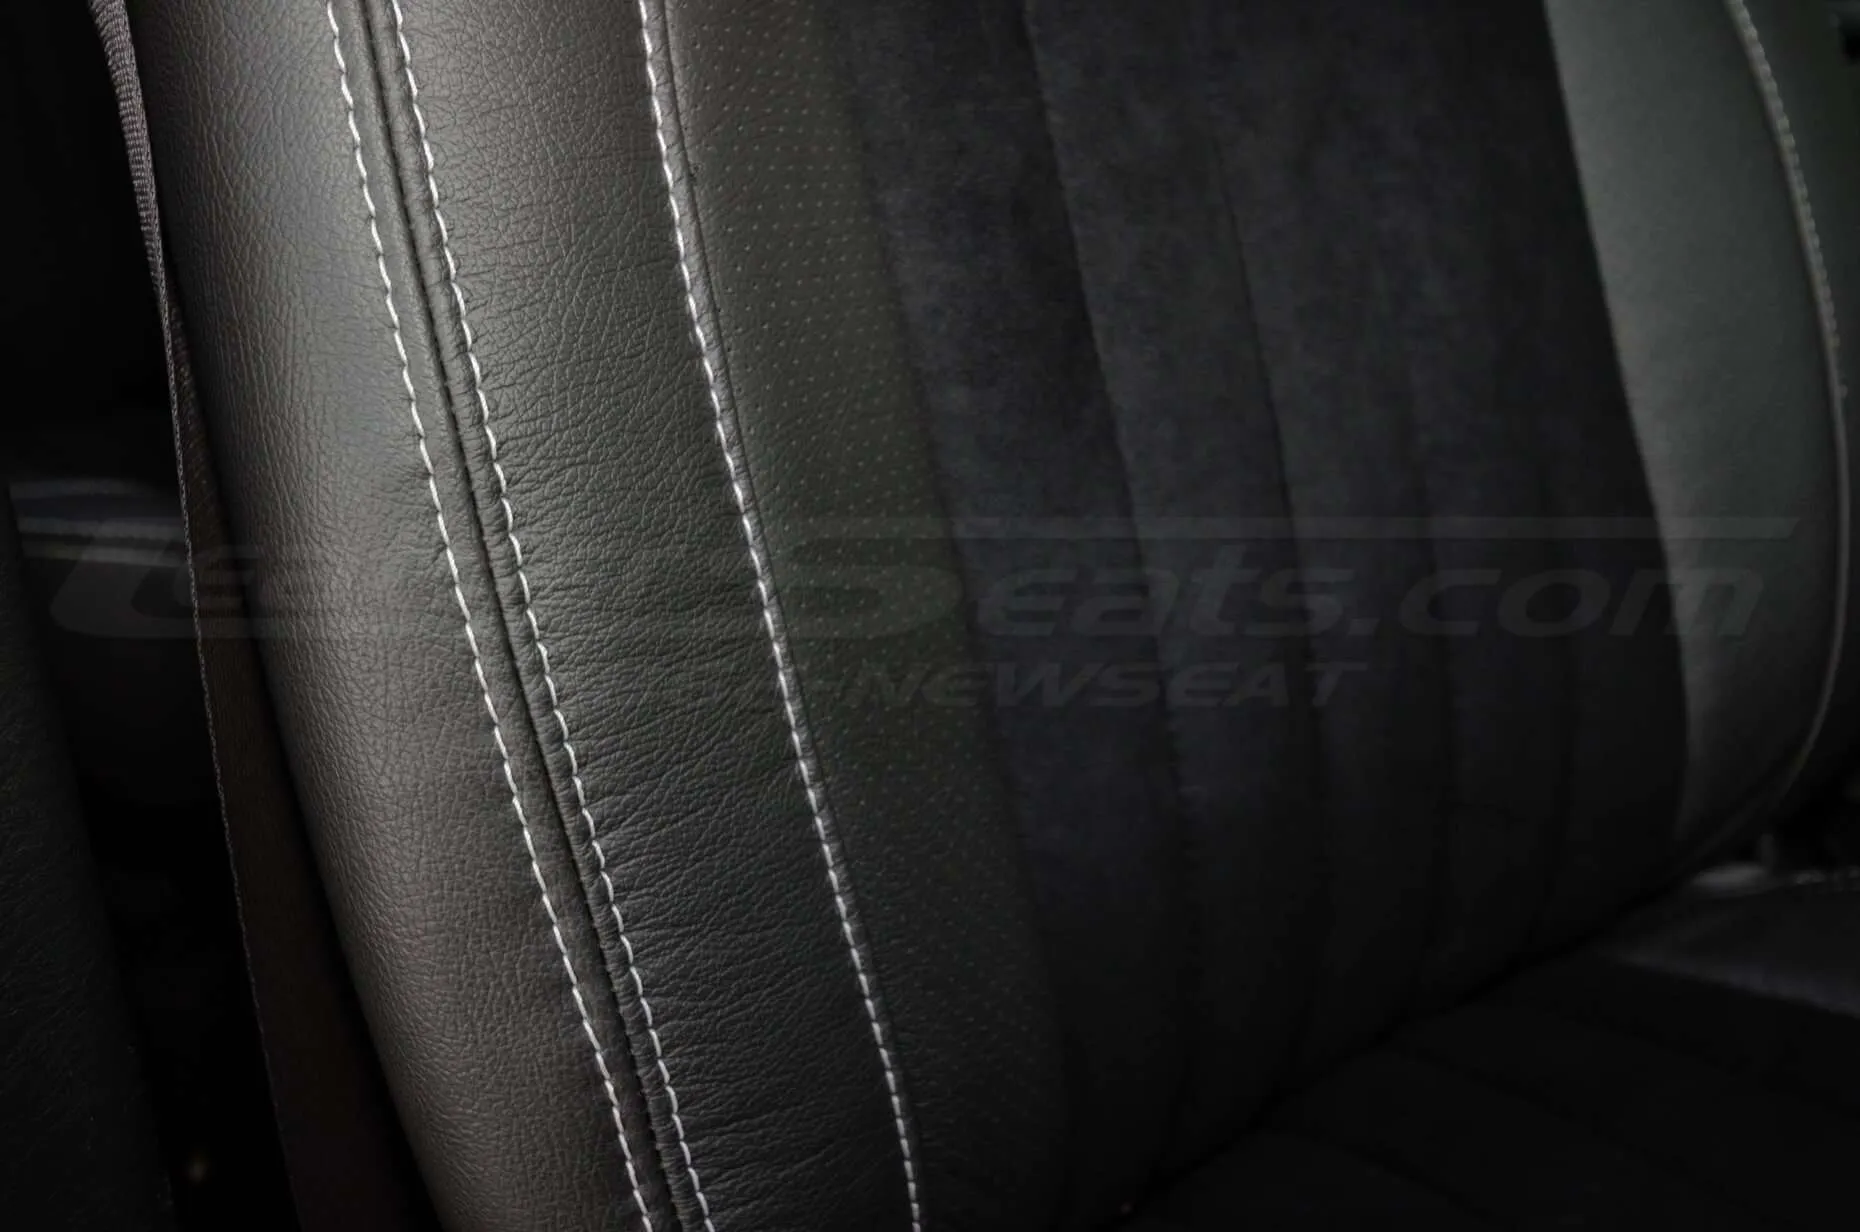 Dodge Ram Upholstery Kit - White double-stitching & Black suede